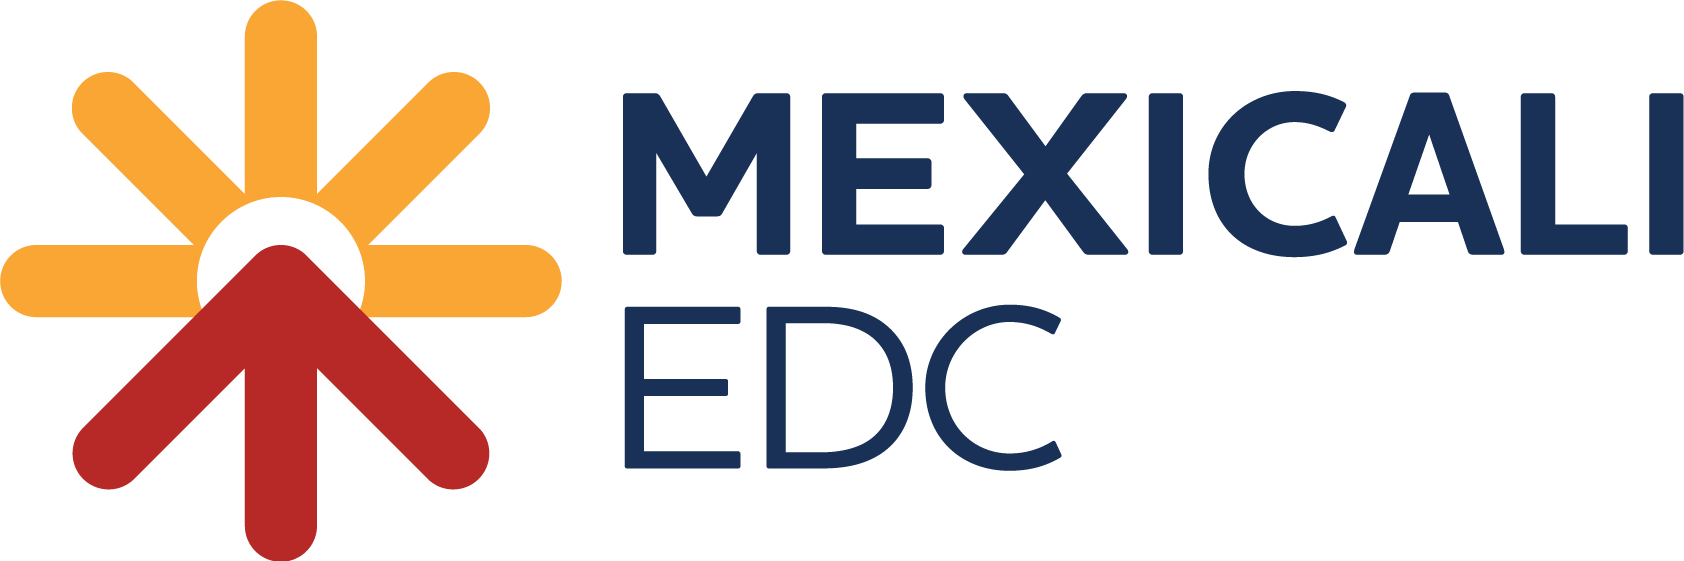 Mexicali EDC